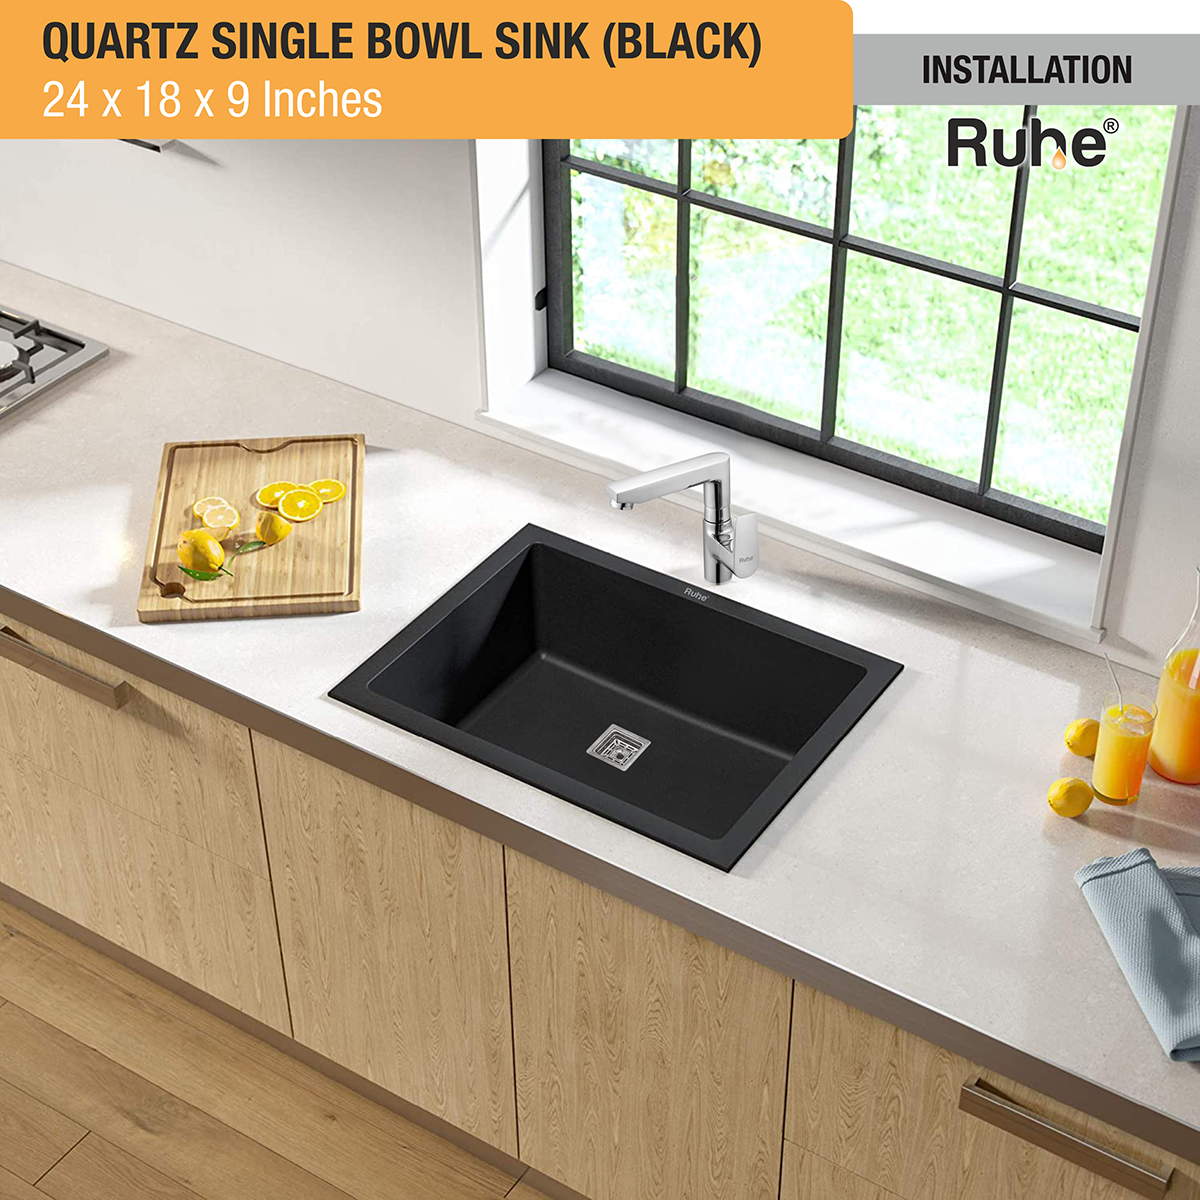 Quartz Black Single Bowl Kitchen Sink (24 x 18 x 9 inches) installed